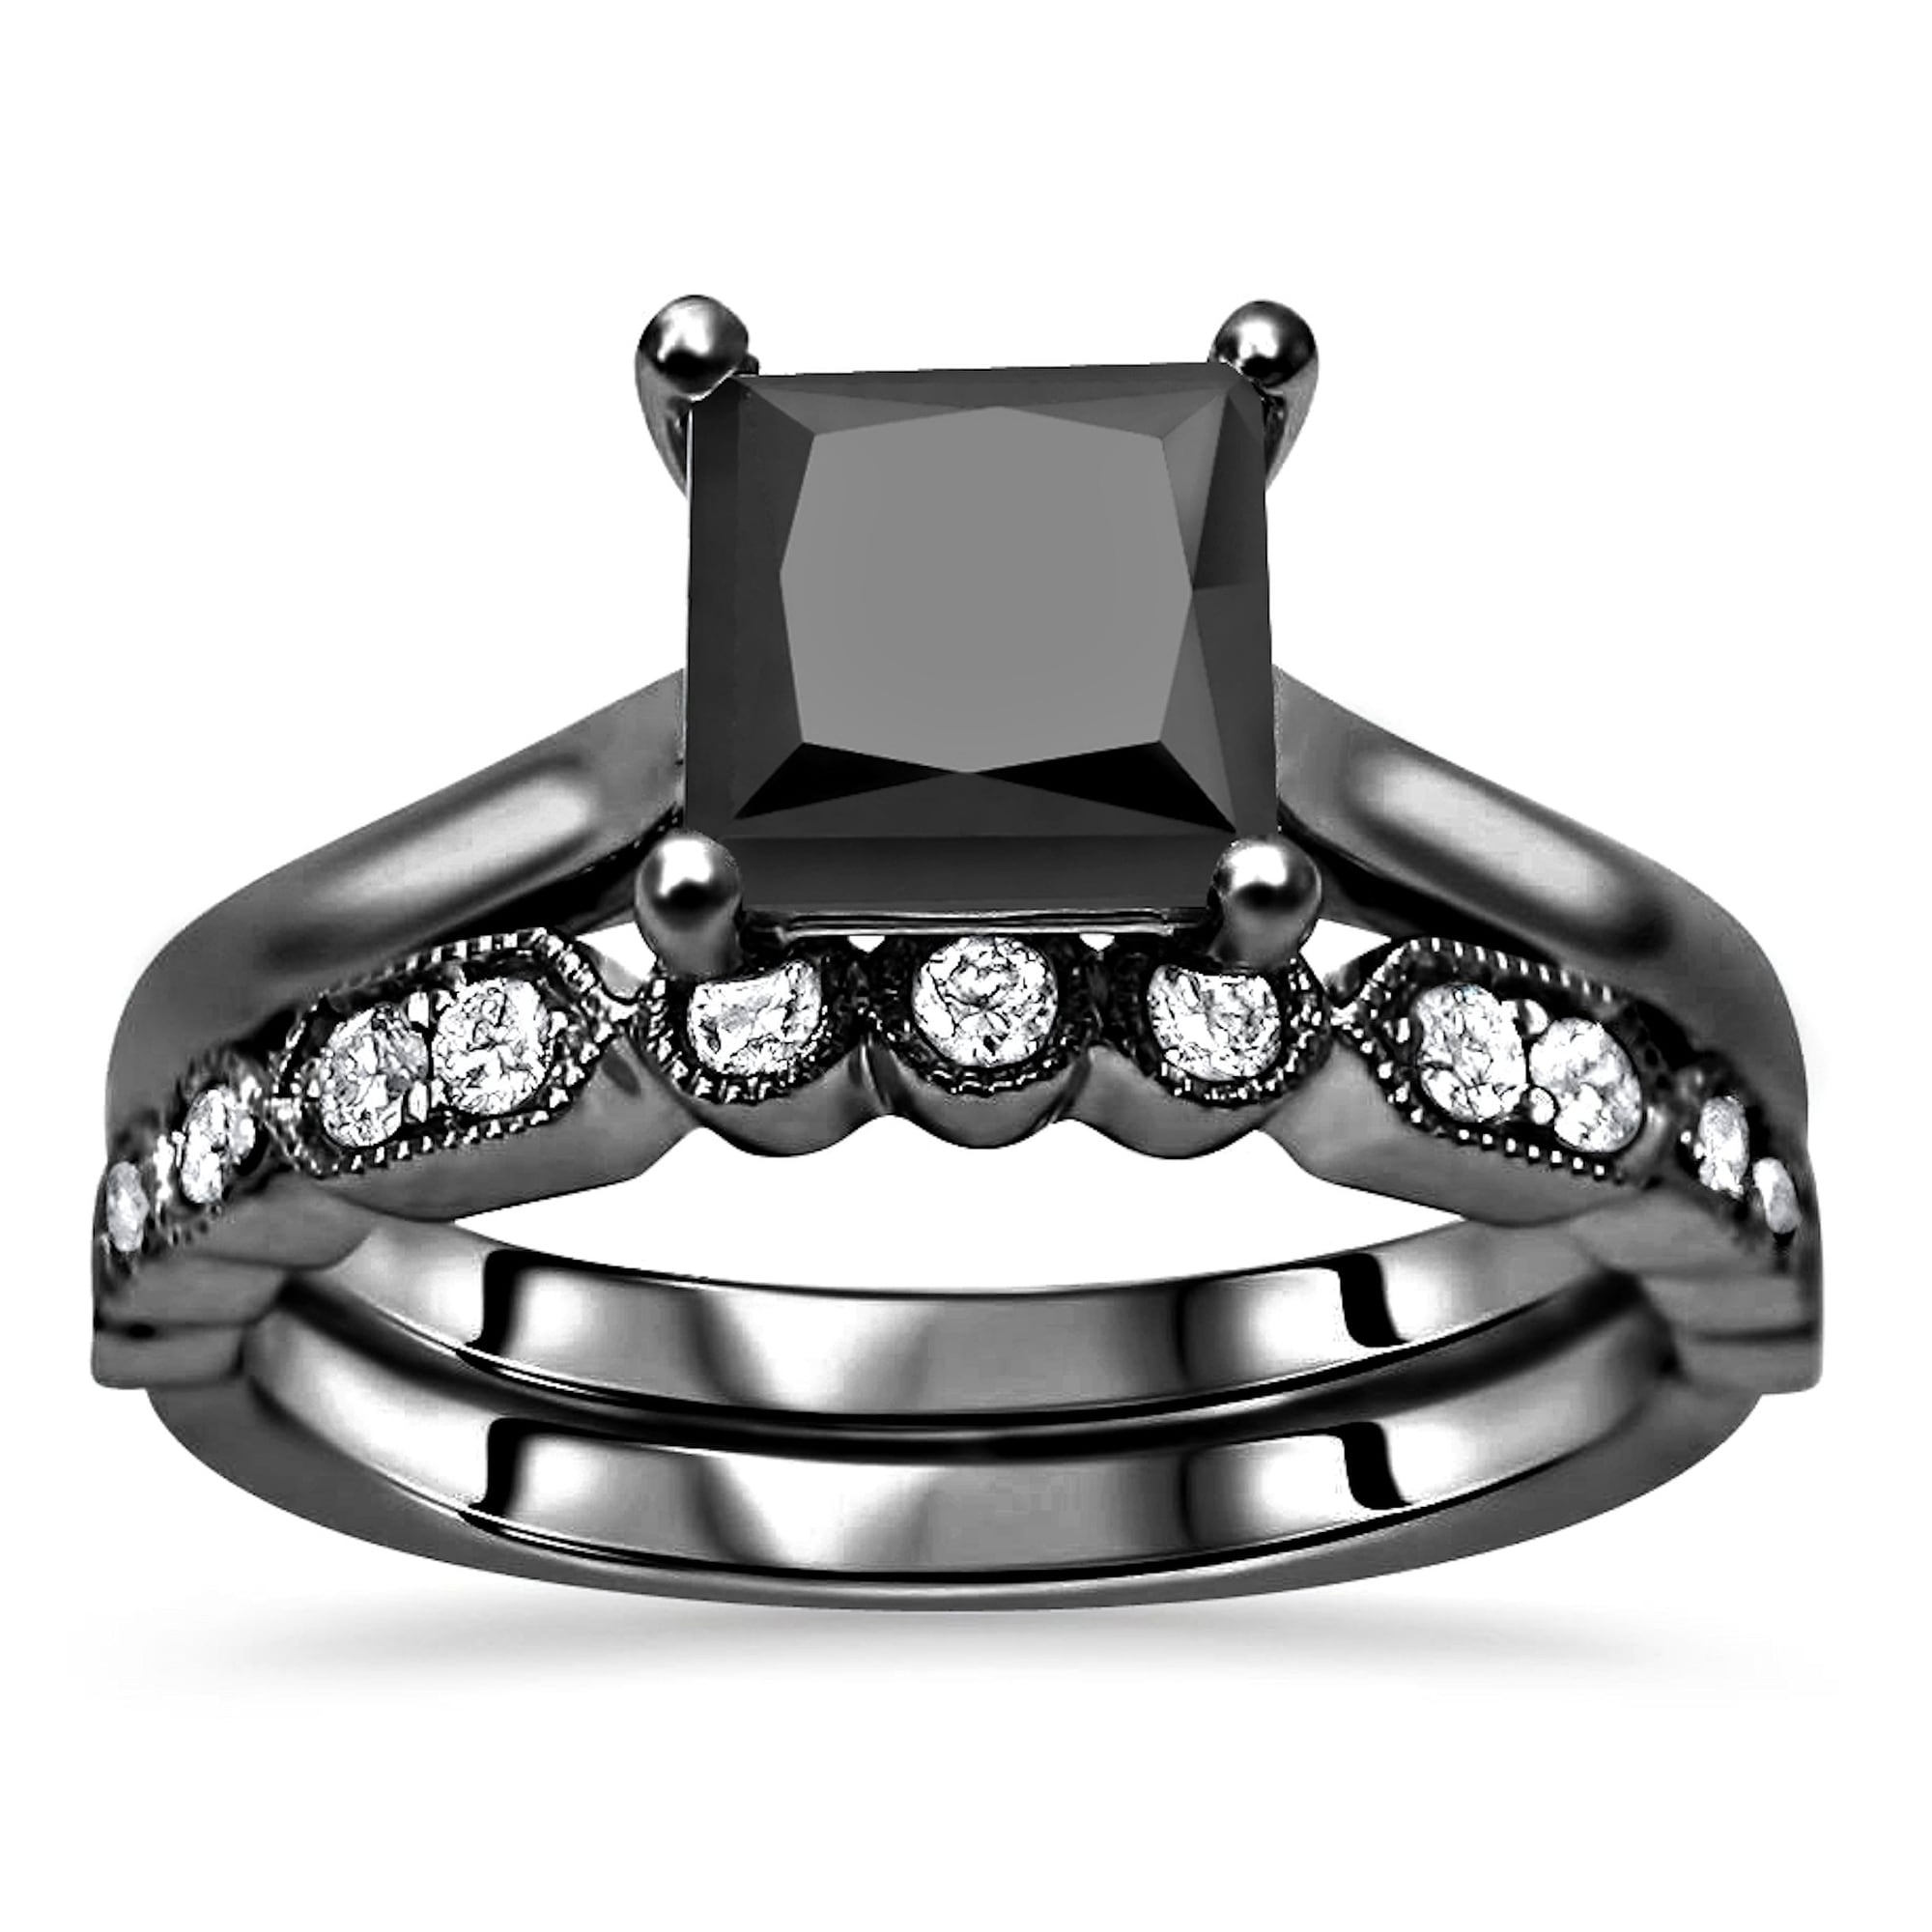 Kingray Jewelry Black Onyx Princess Cut Anniversary Wedding Bridal Ring Set 